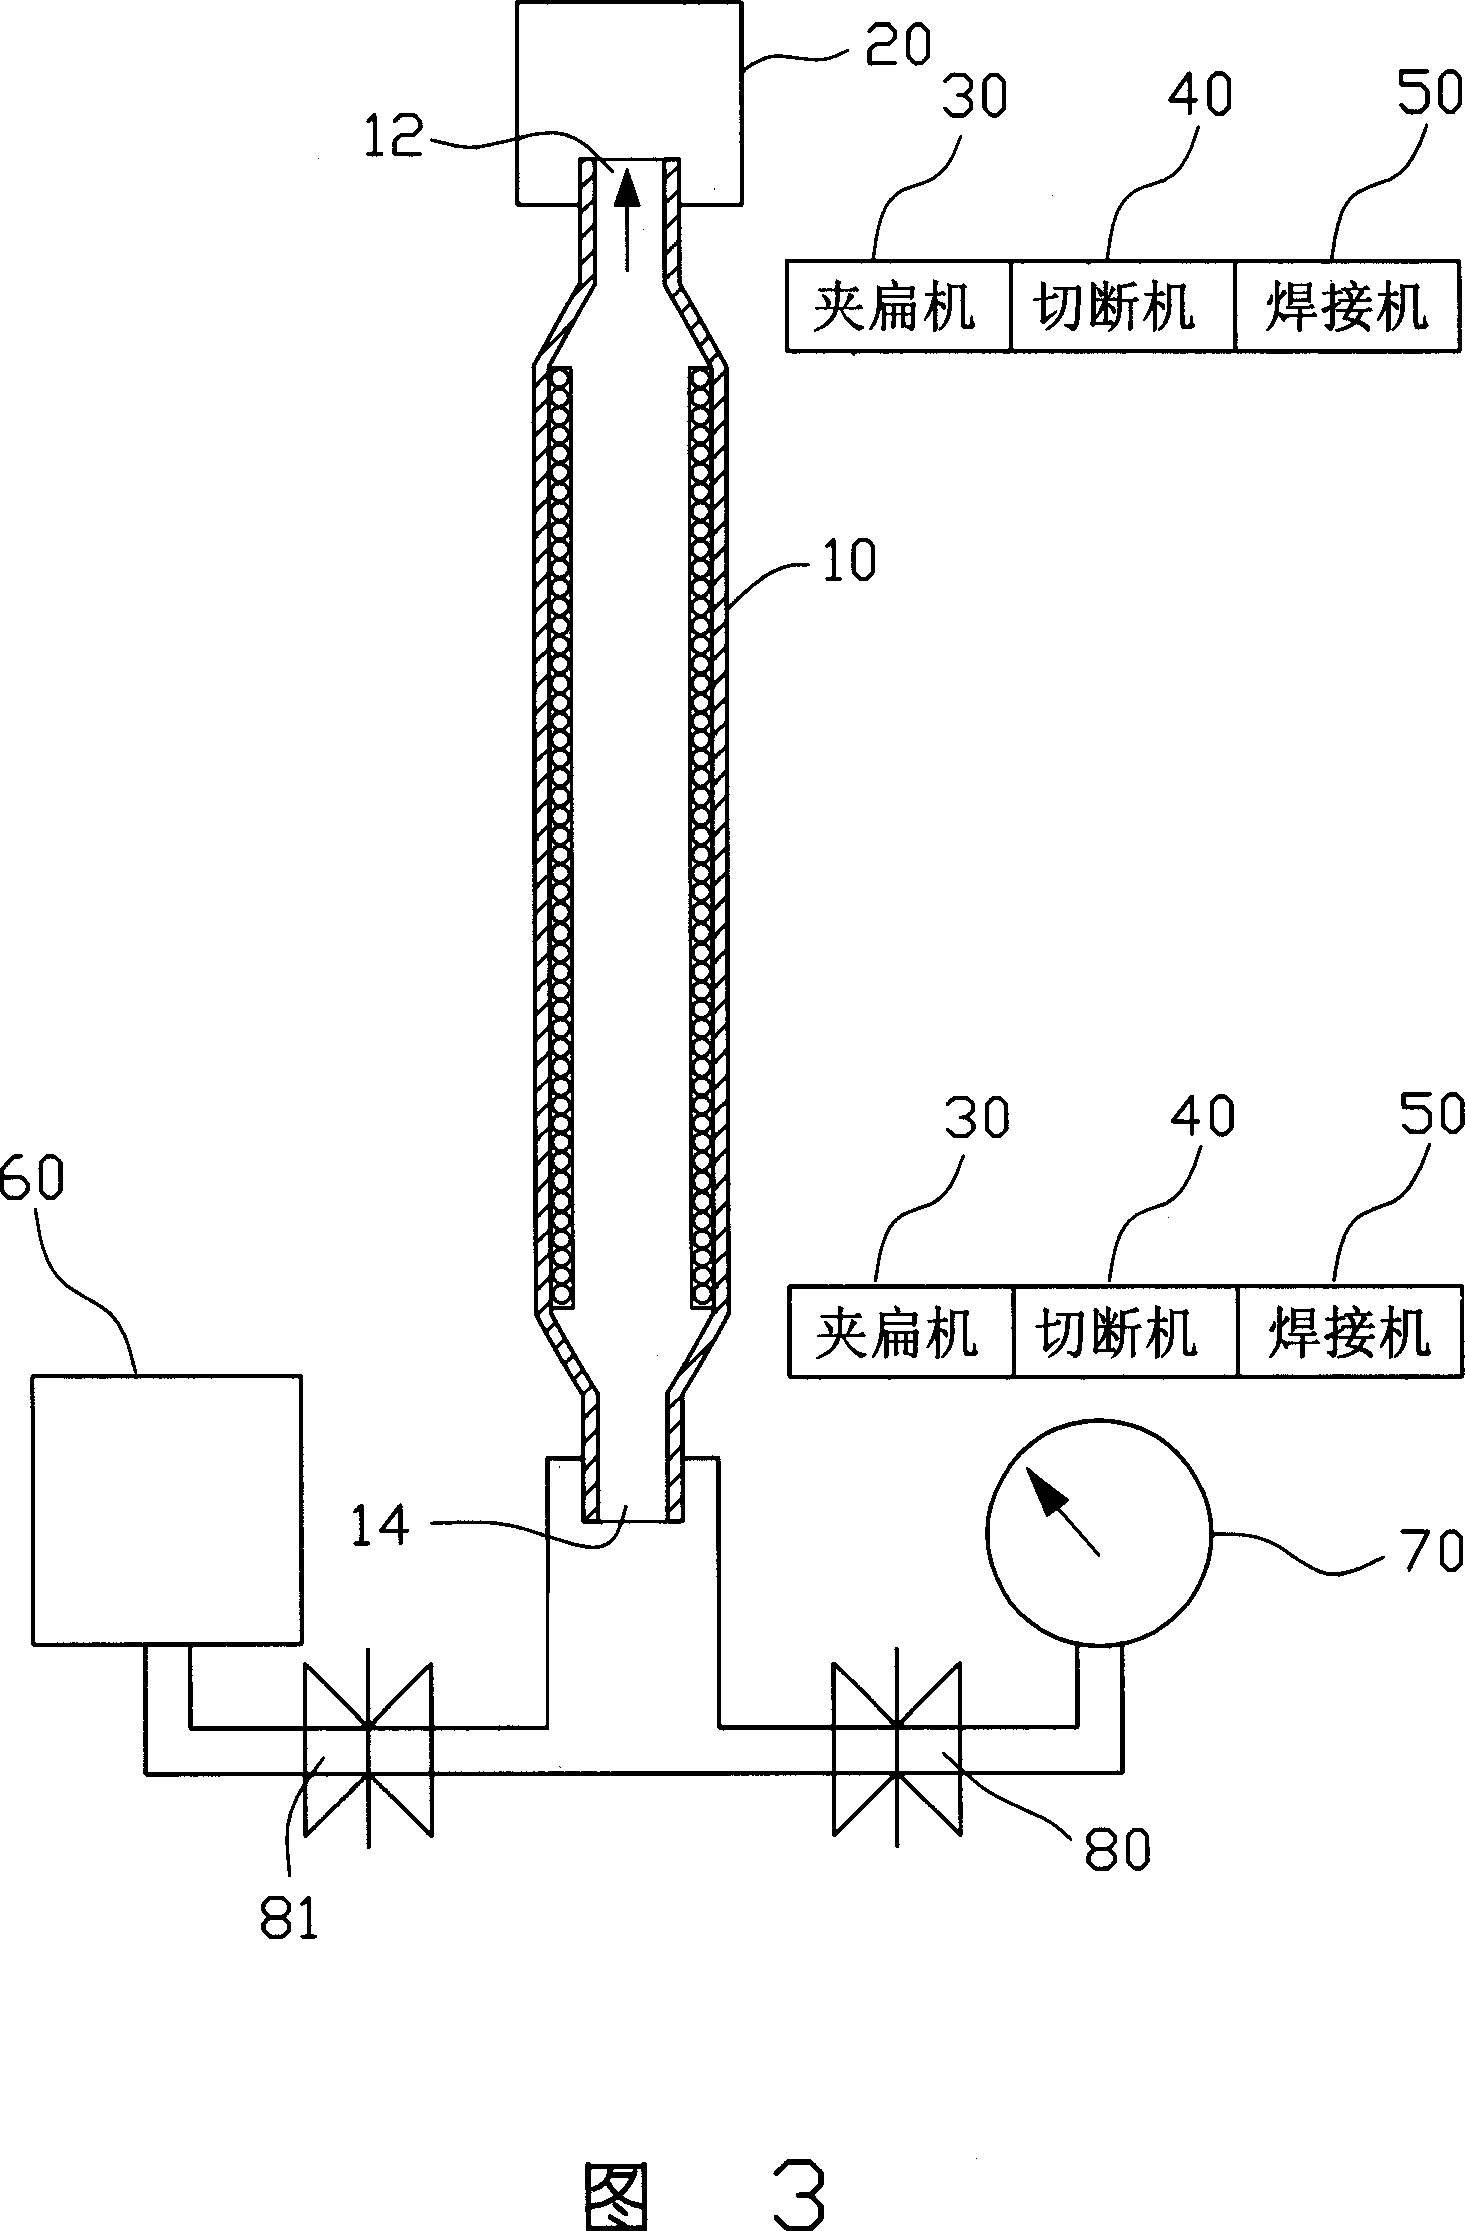 Heat-conductive pipe and mfg. method